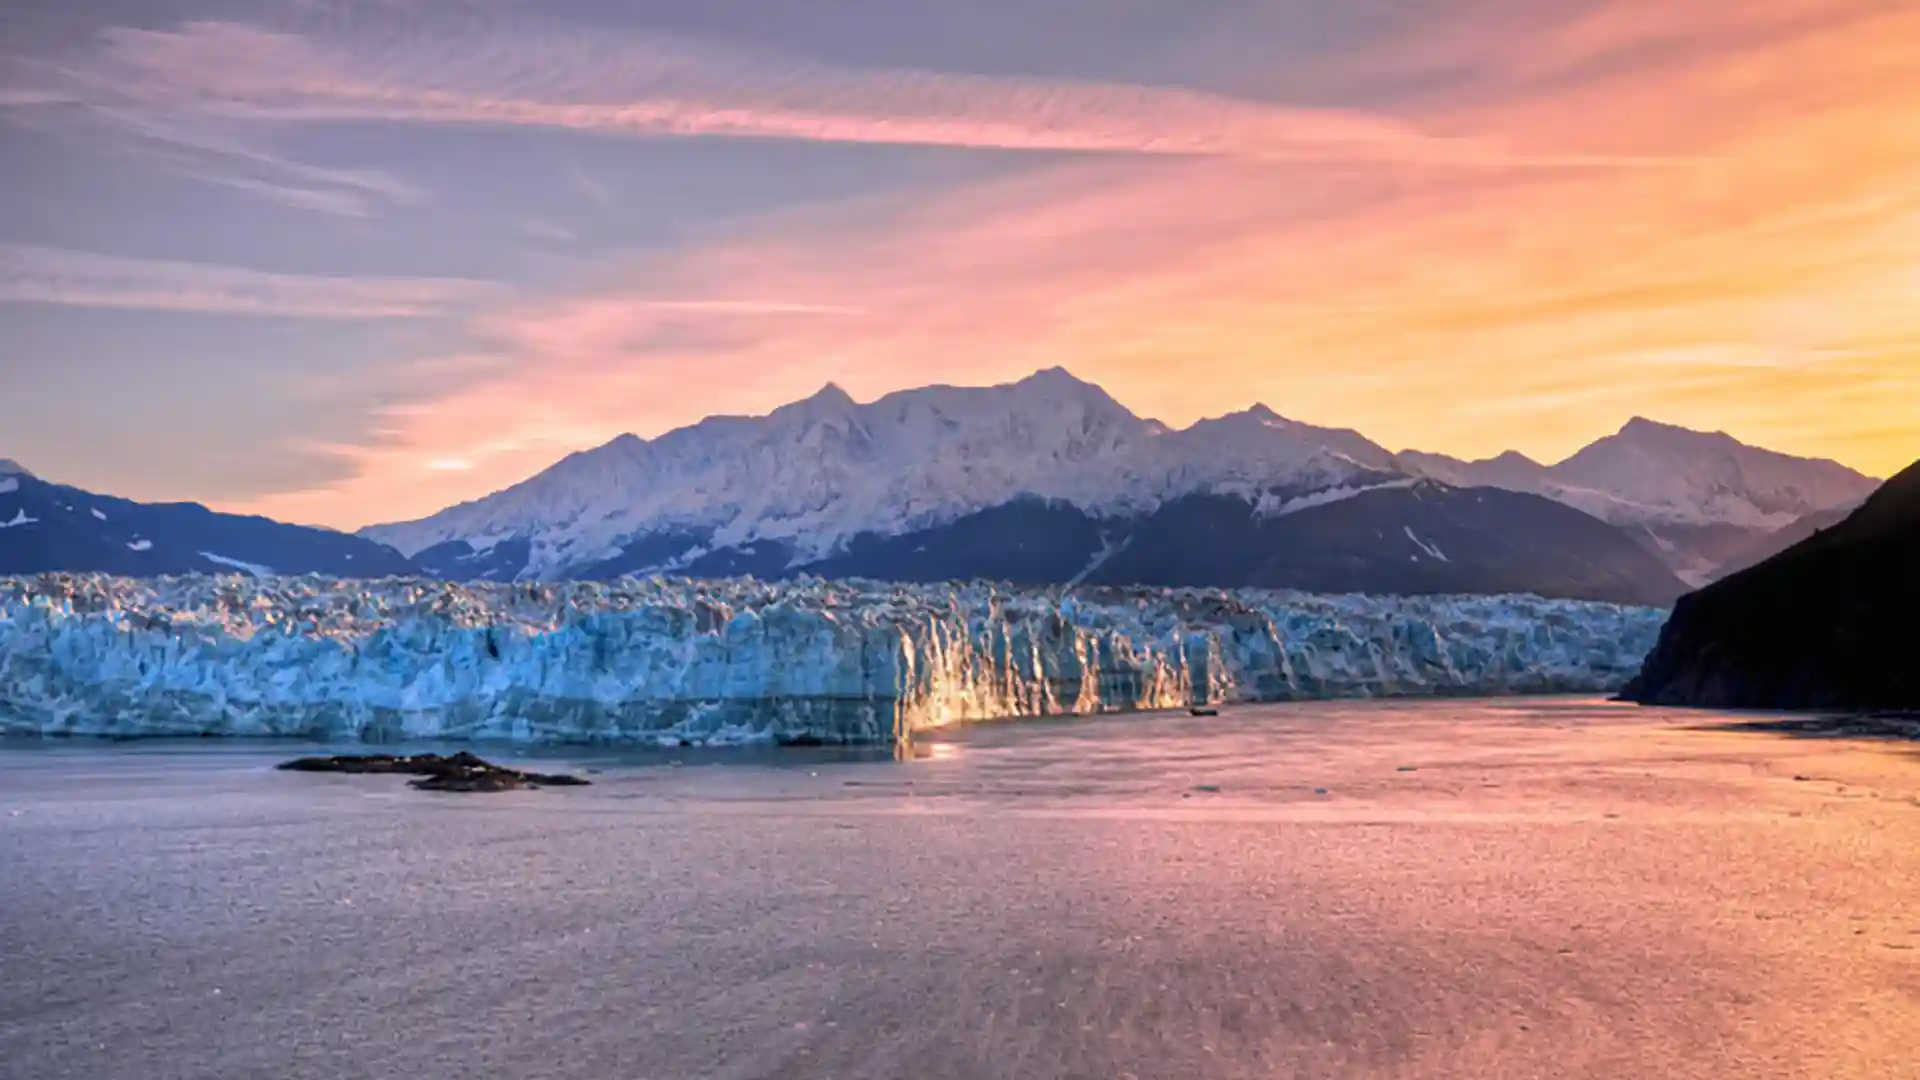 View of Hubbard Glacier in Alaska at sunset.